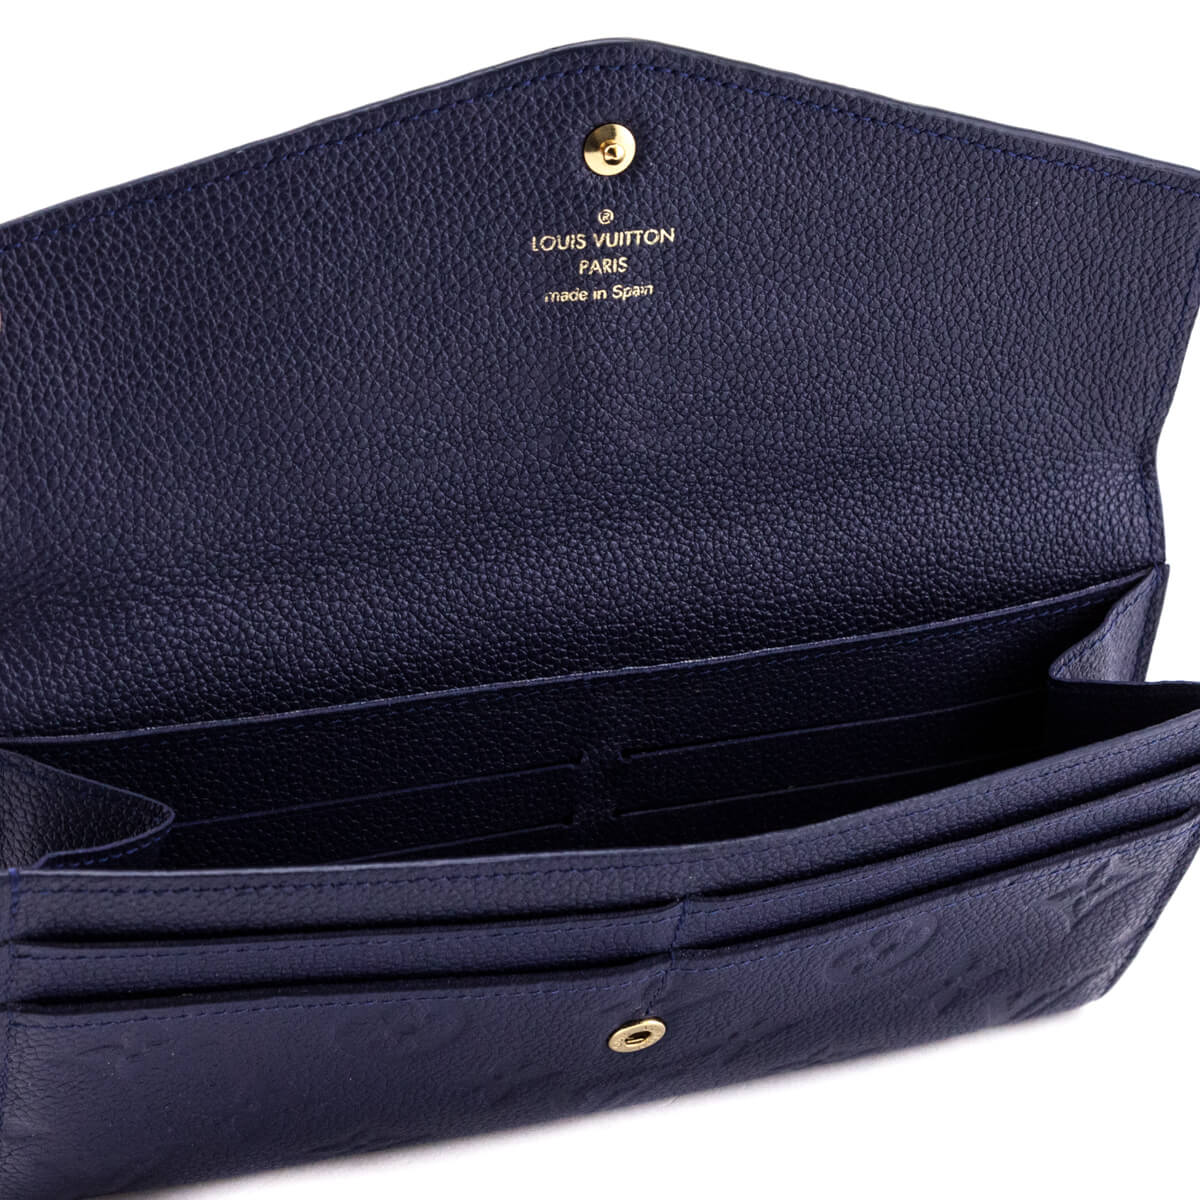 Unboxing of Louis Vuitton Curieuse Wallet 